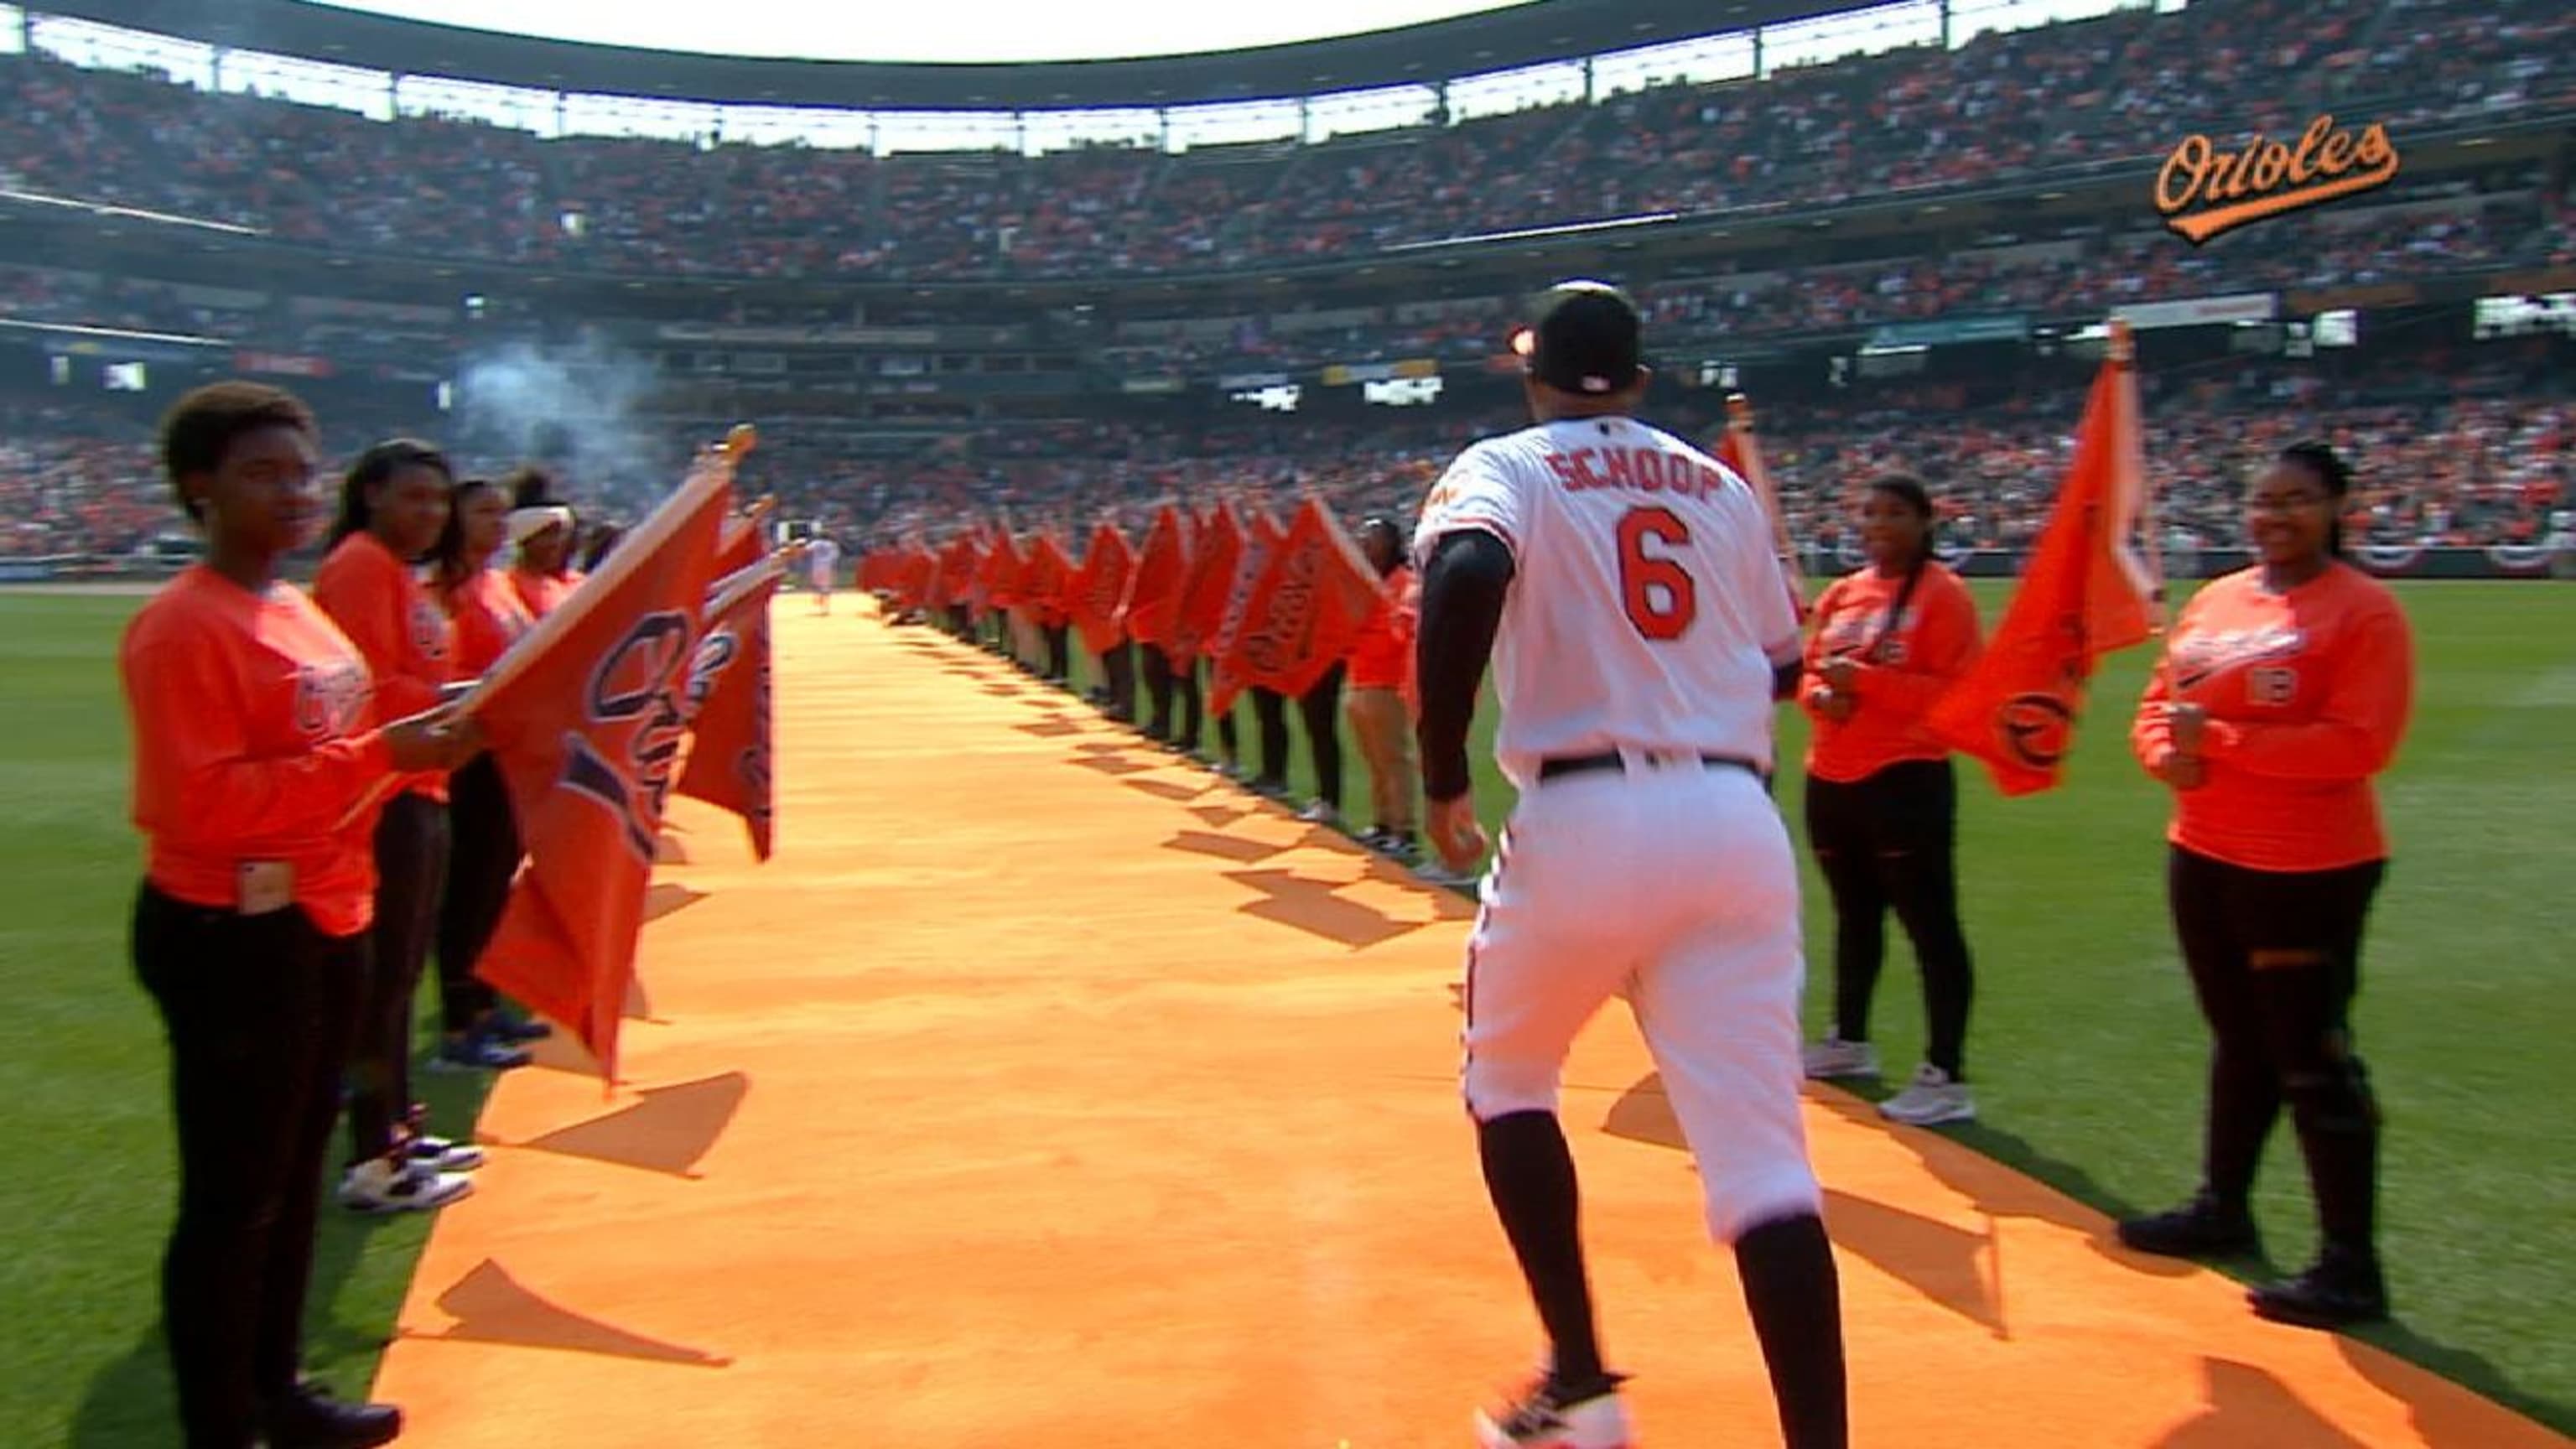 Orioles' Opening Day orange carpet history